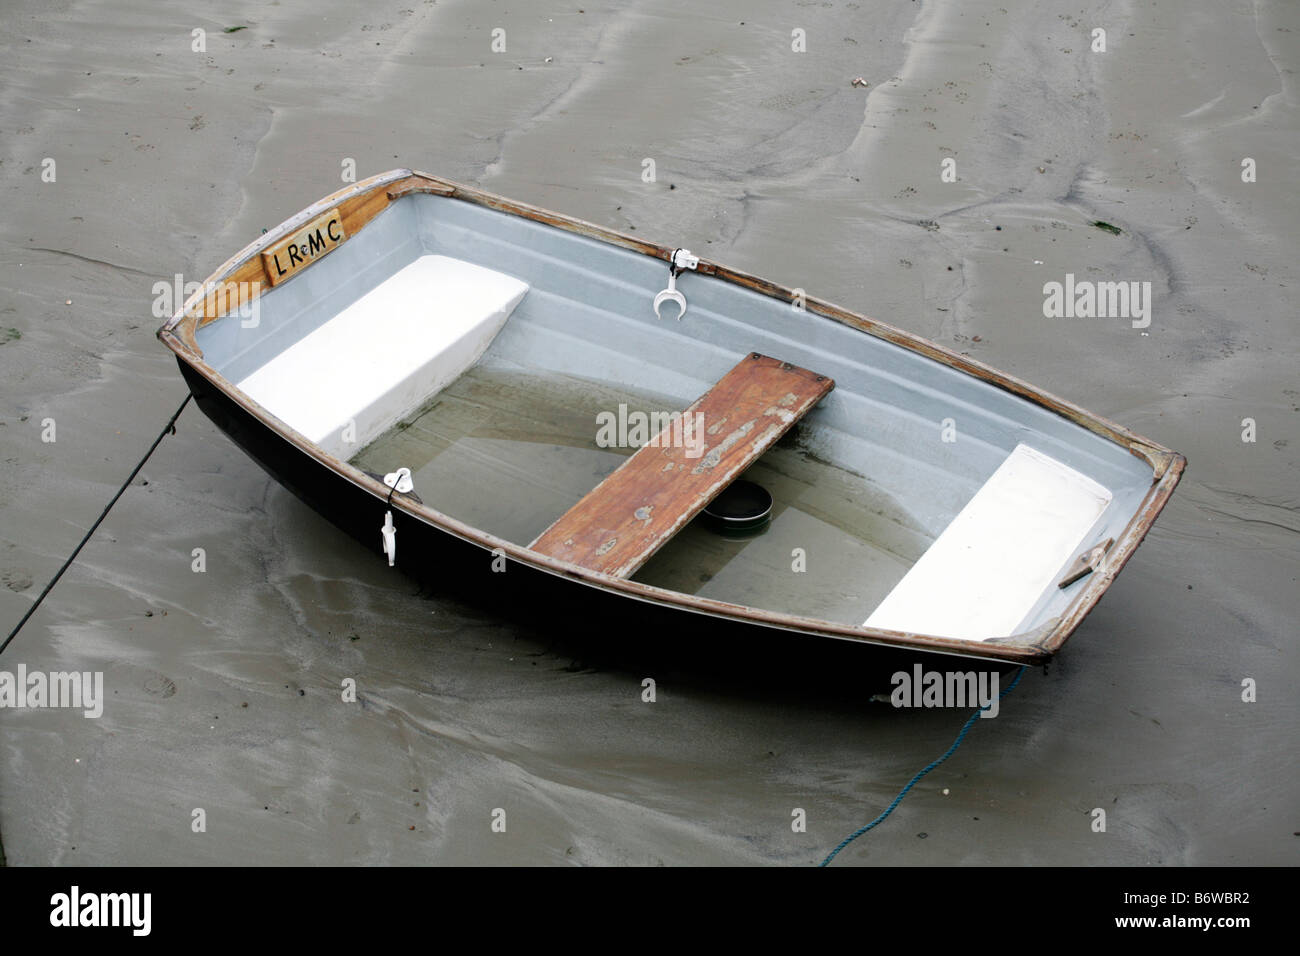 A single rowing boat in Lyme Regis harbour, Dorset UK. Stock Photo